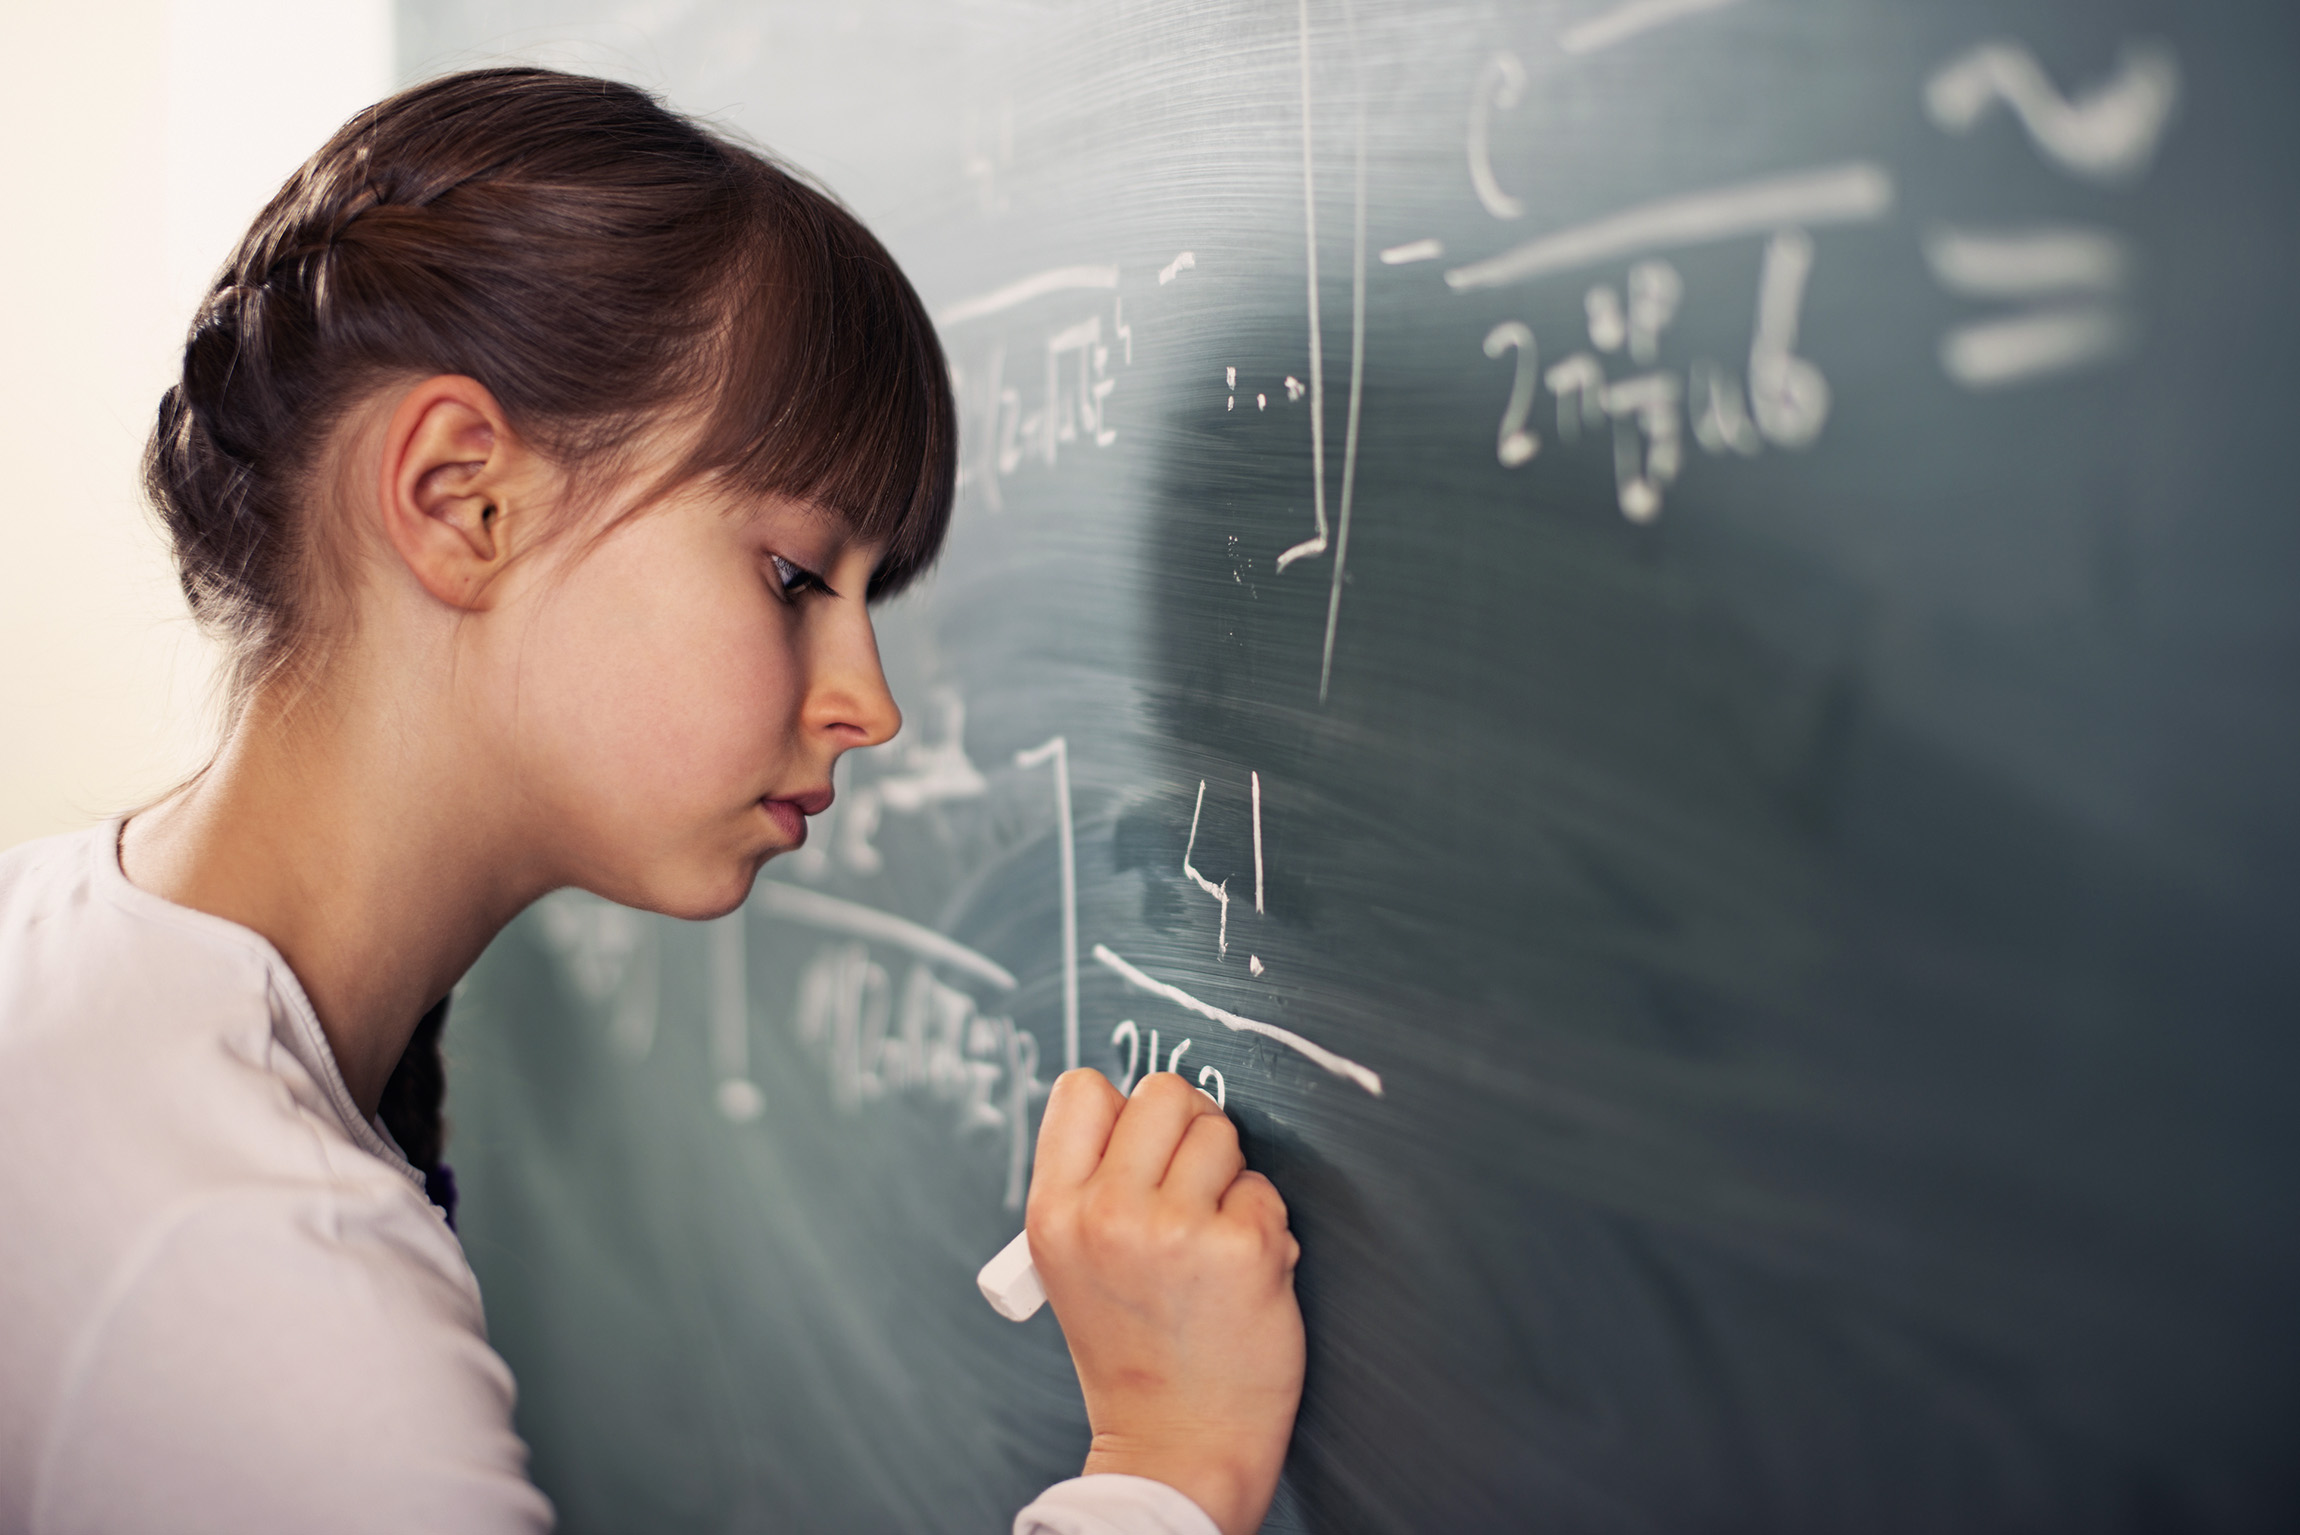 girl writing equations on chalkboard